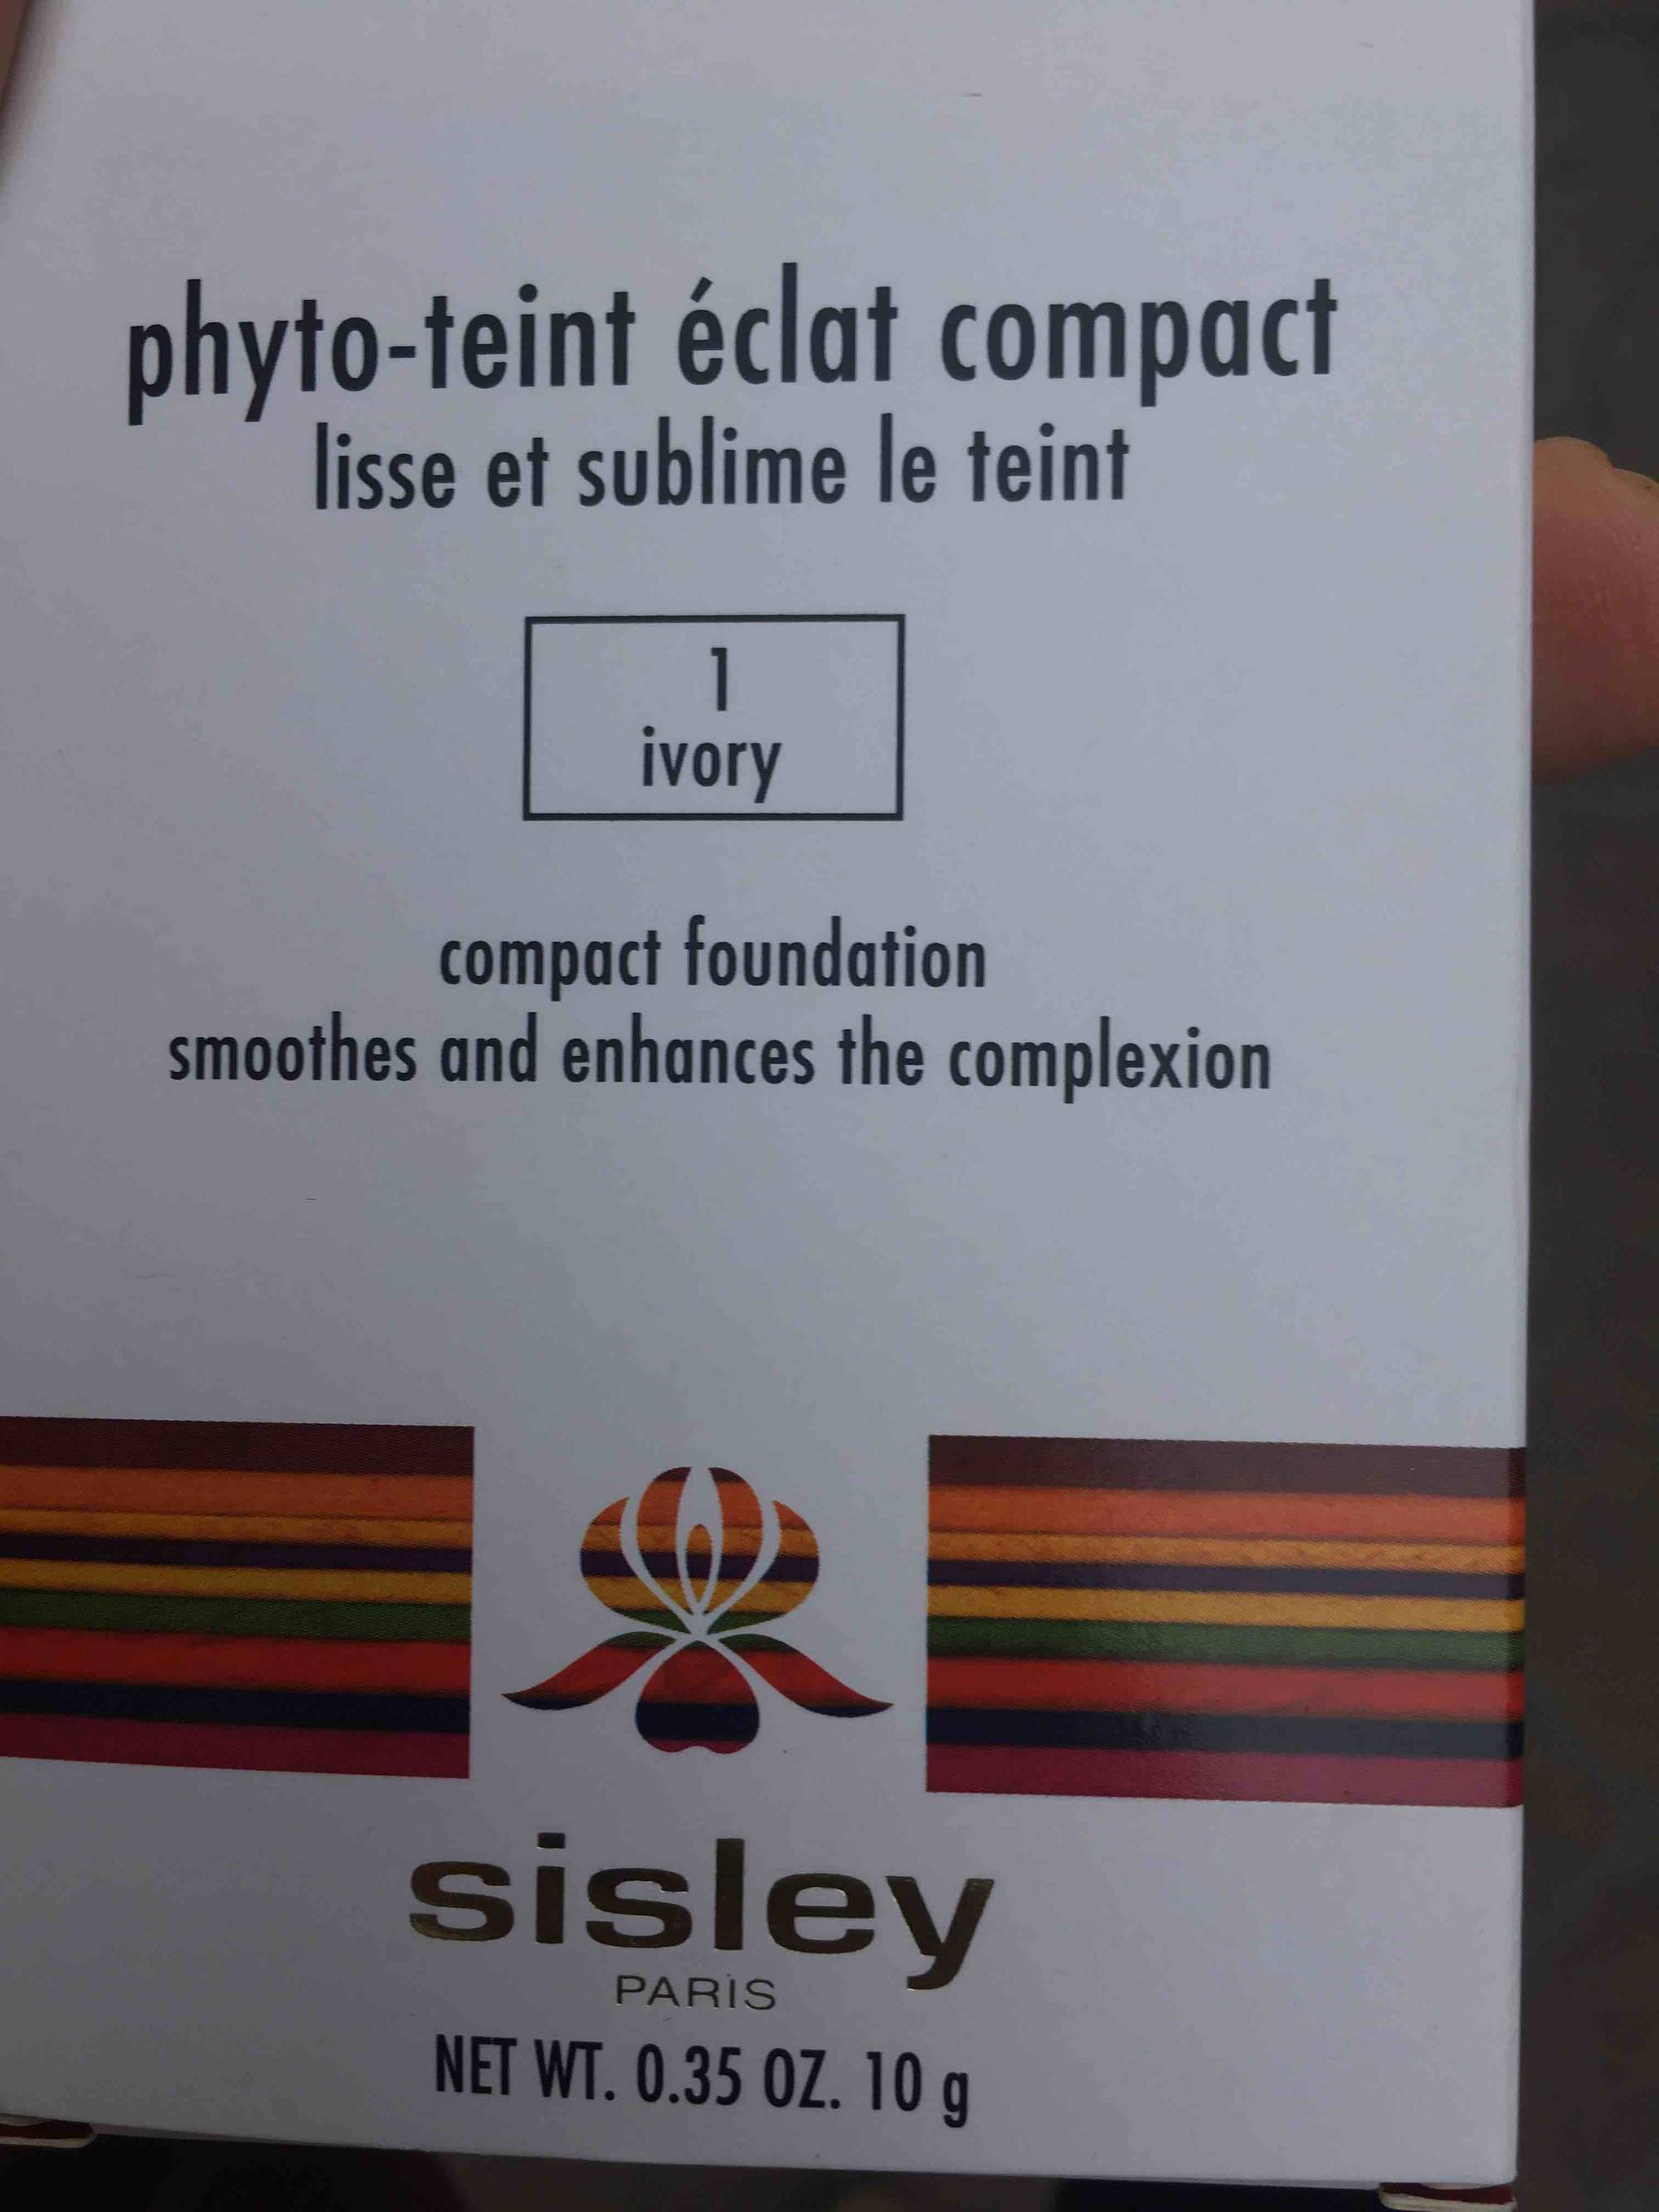 SISLEY PARIS - Phyto-teint éclat compact 1 ivory